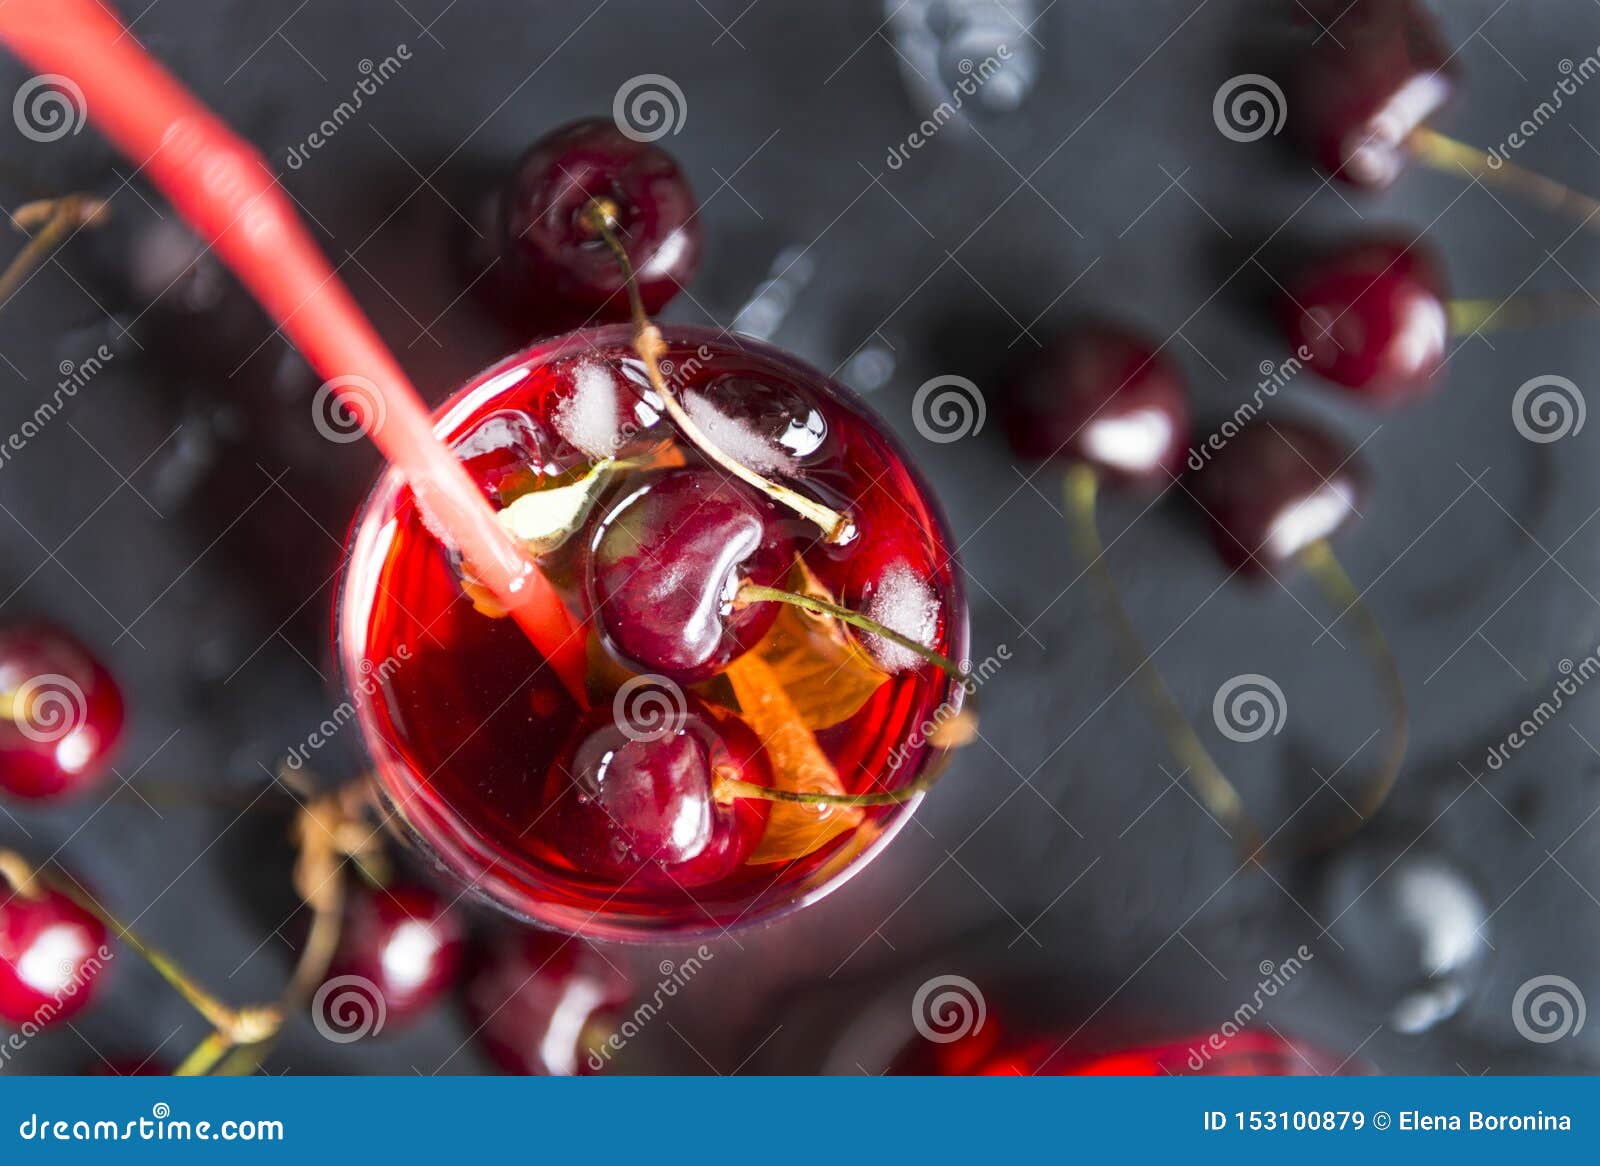 cherry, limonada glass of cherry on a black background, berries